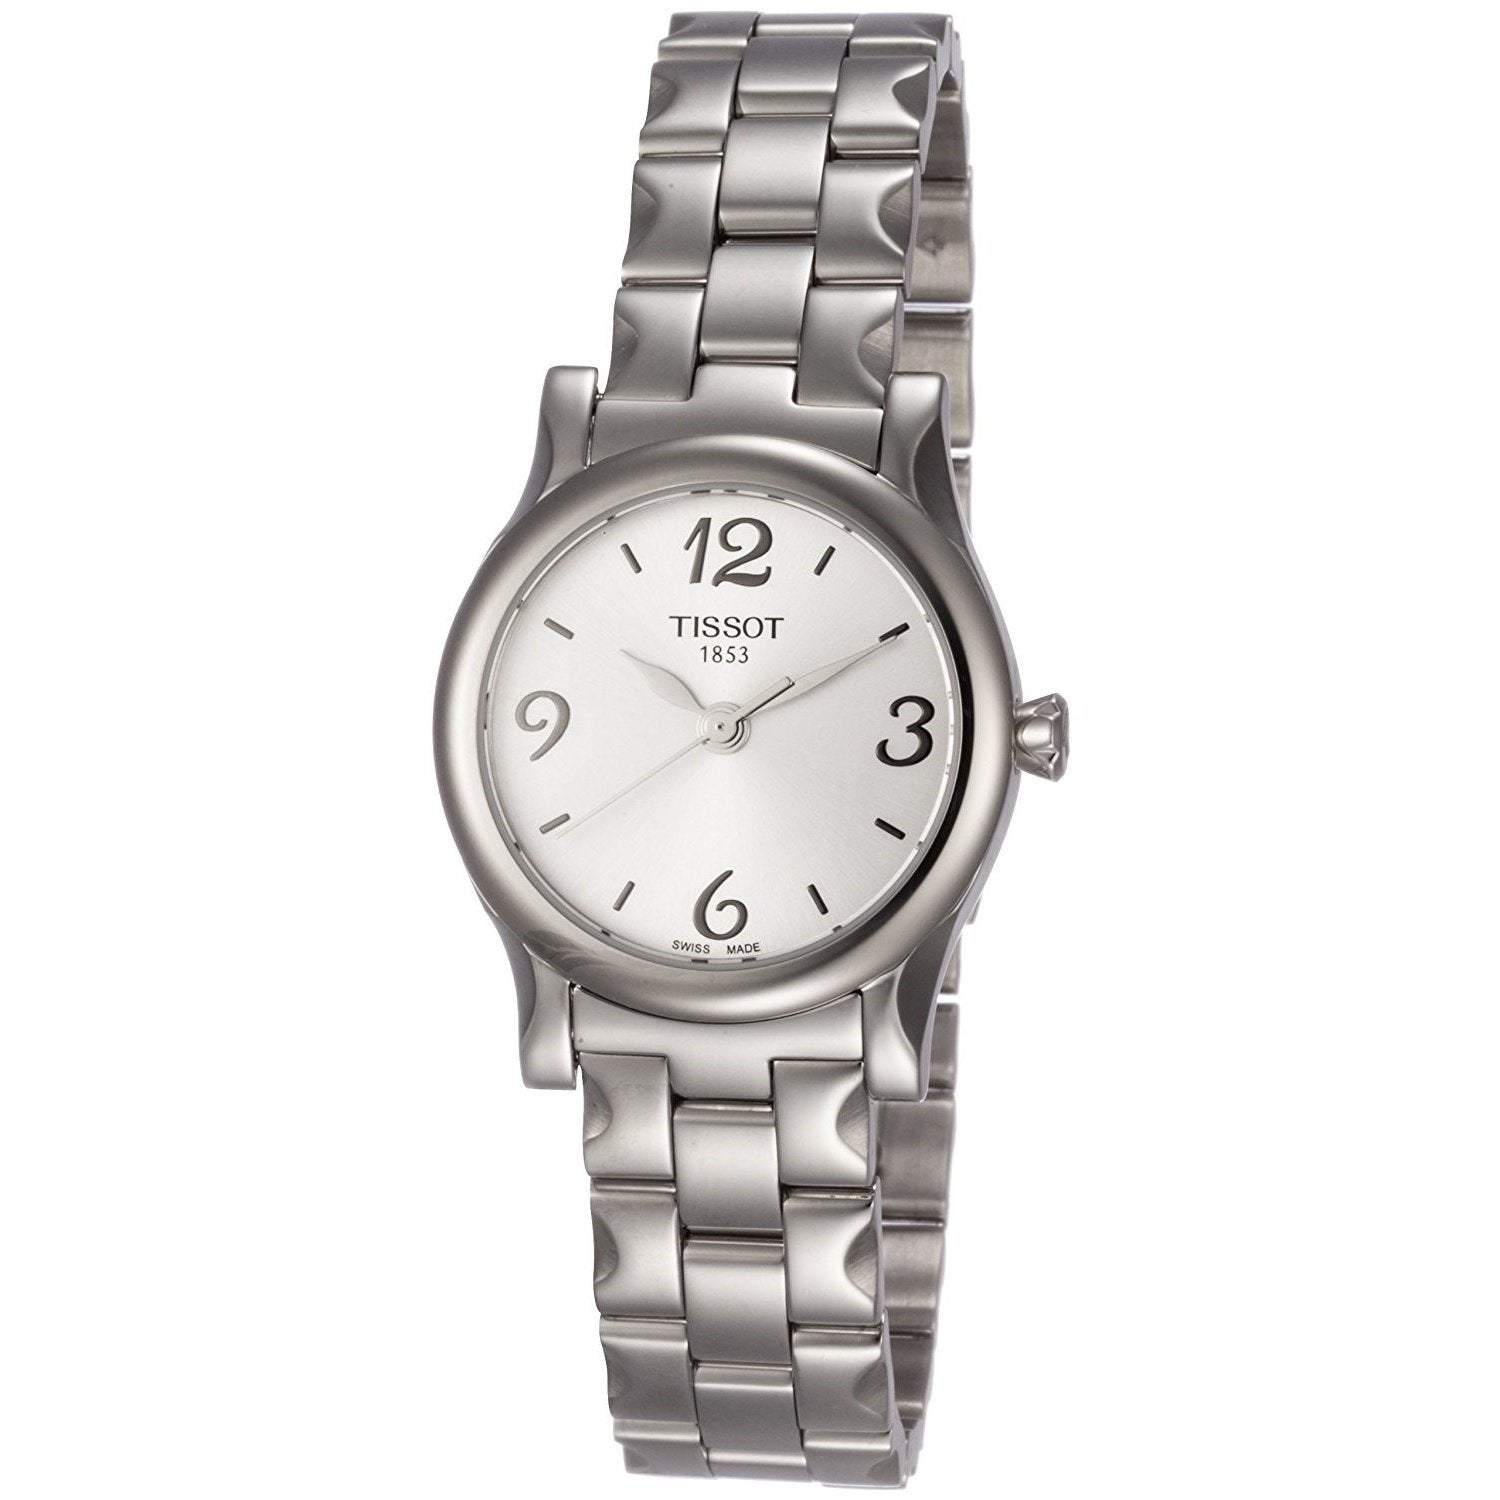 Tissot Swiss Made T-Wave Stylist-T Ladies' Stainless Steel Watch T0282101103700 - Prestige